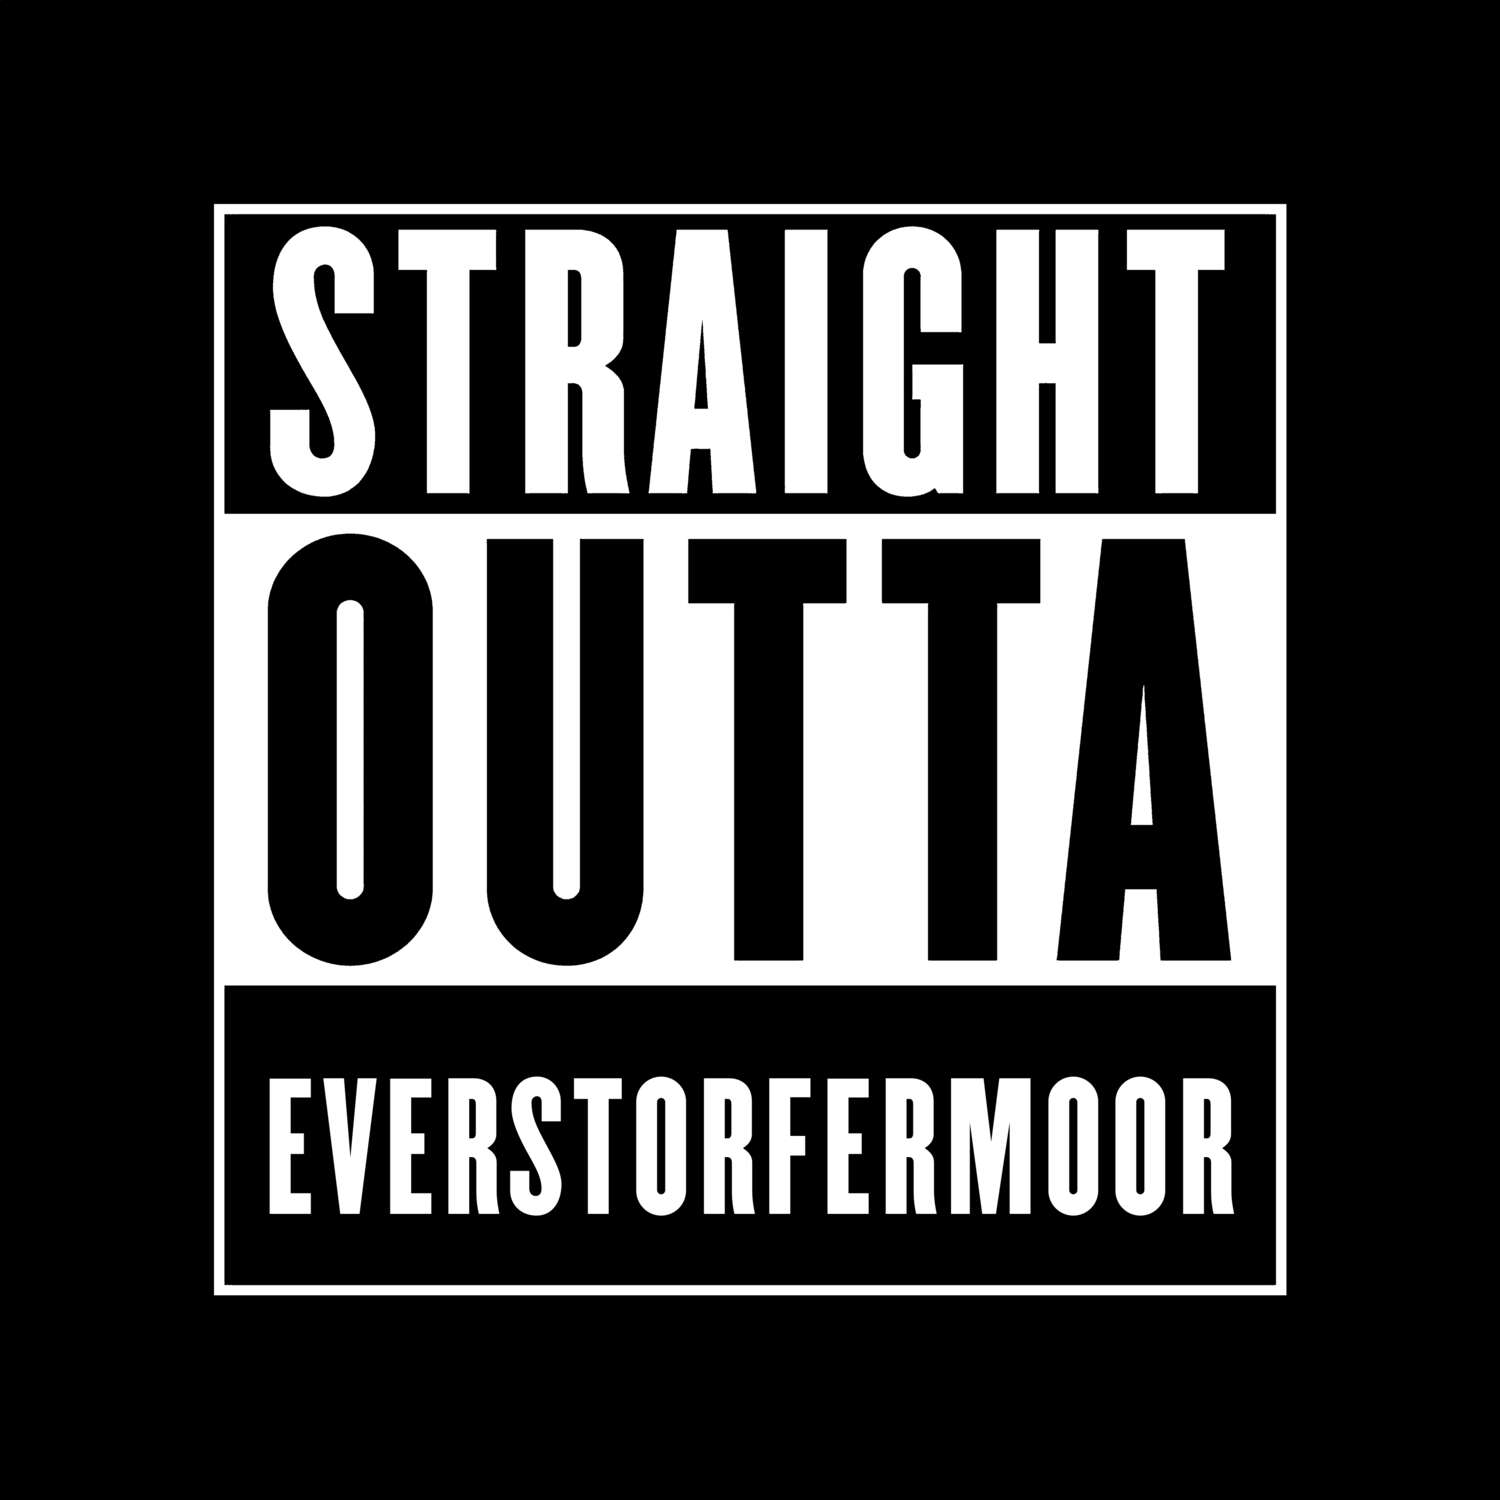 Everstorfermoor T-Shirt »Straight Outta«